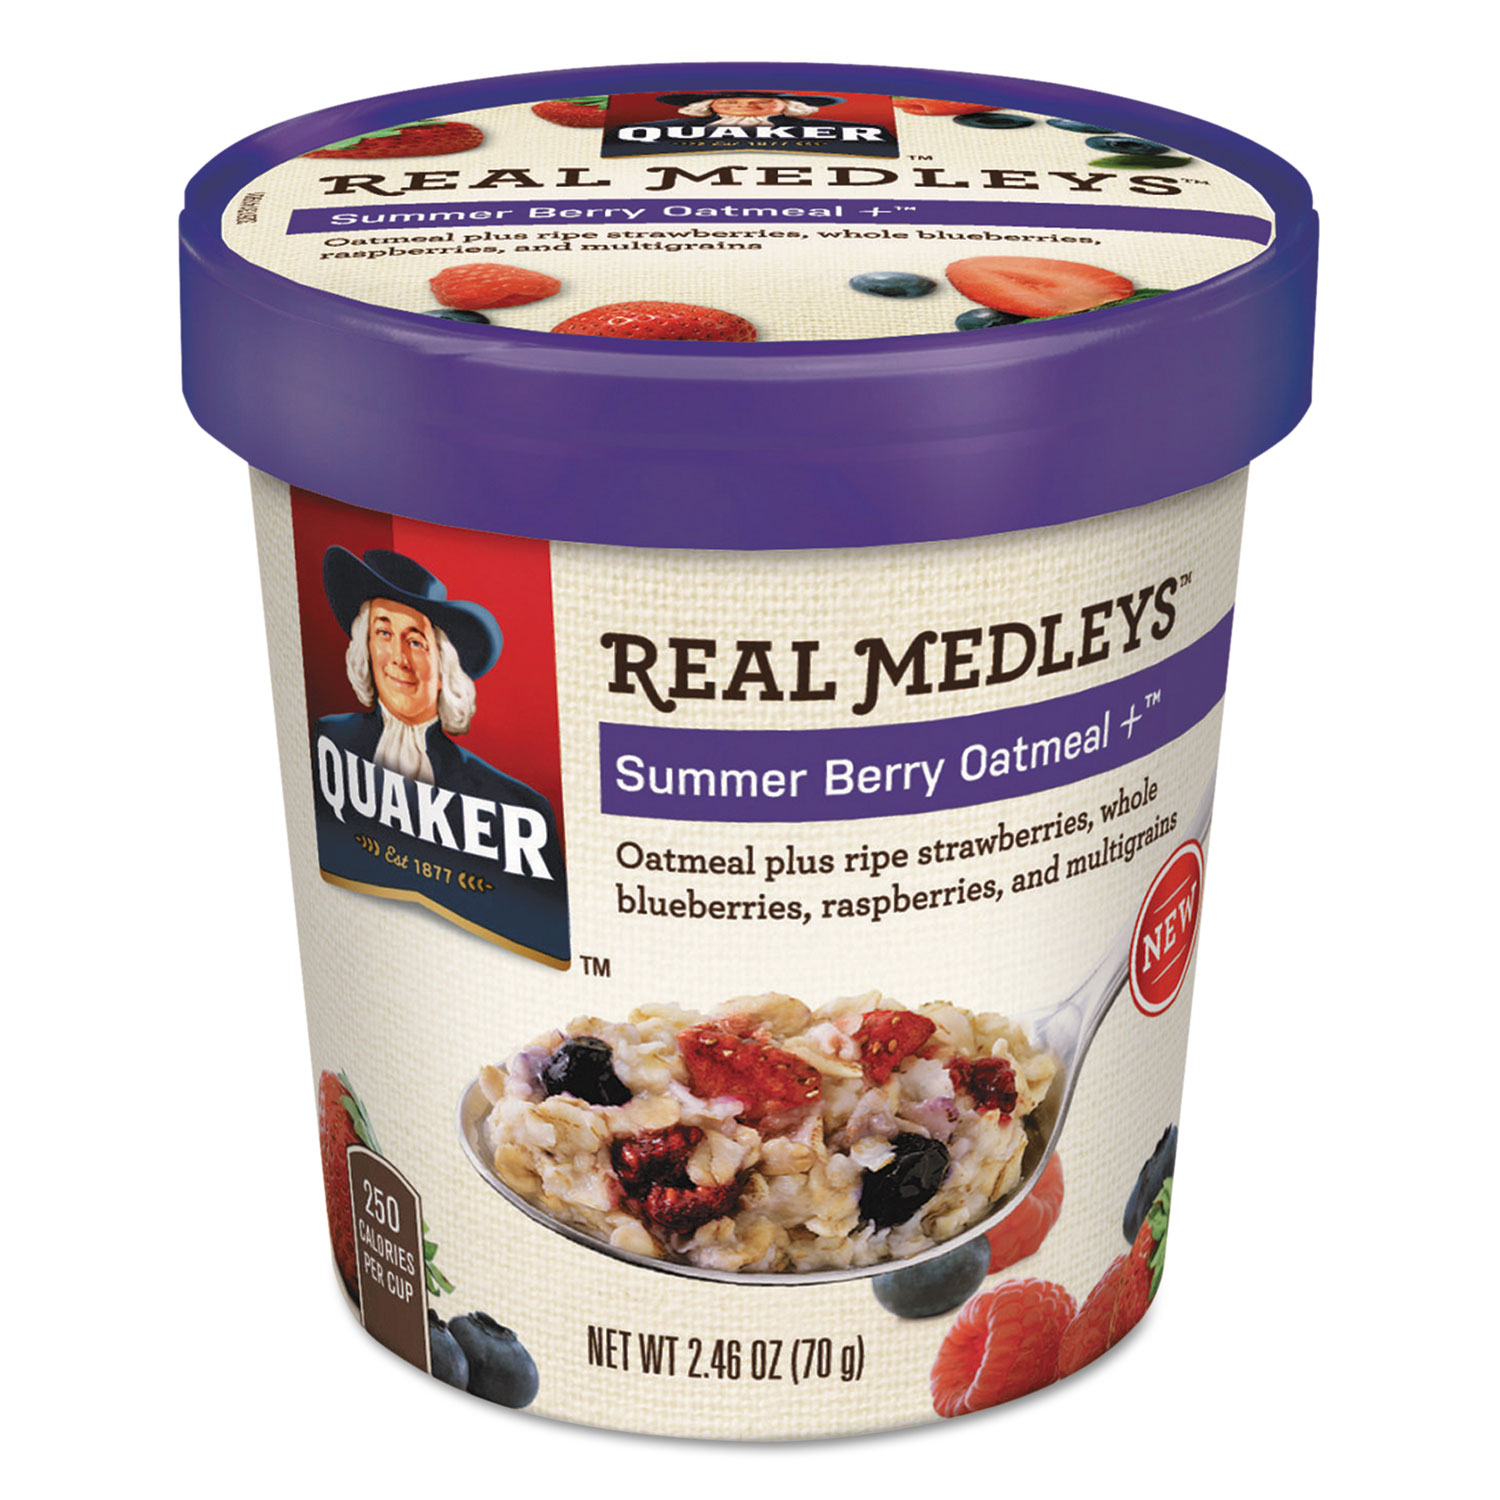 Real Medleys Oatmeal, Summer Berry Oatmeal+, 2.46oz Cup, 12/Carton